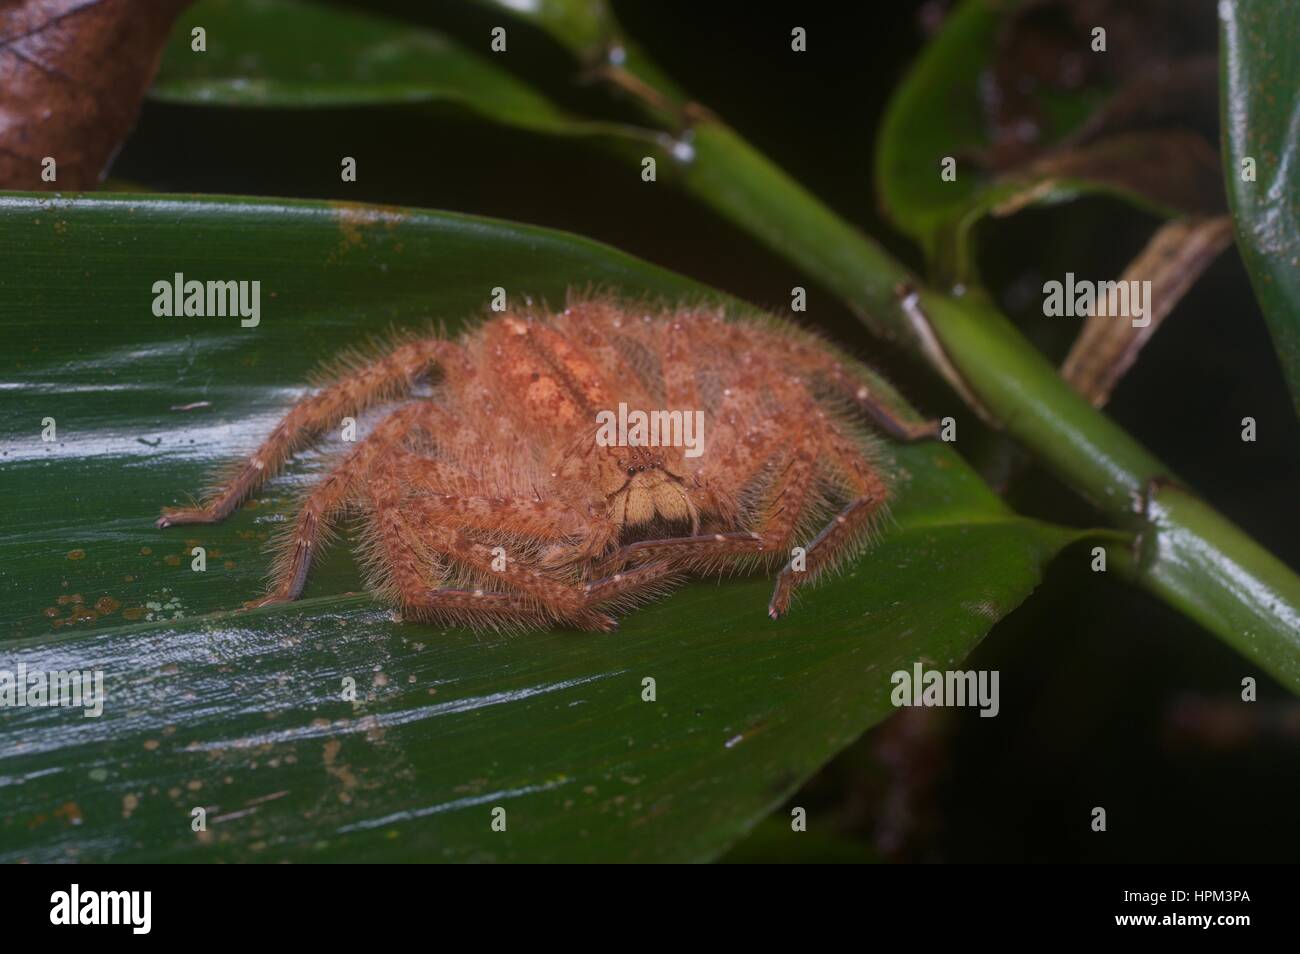 A David Bowie Spider (Heteropoda davidbowie) on a leaf in the rainforest in Ulu Semenyih, Selangor, Malaysia Stock Photo